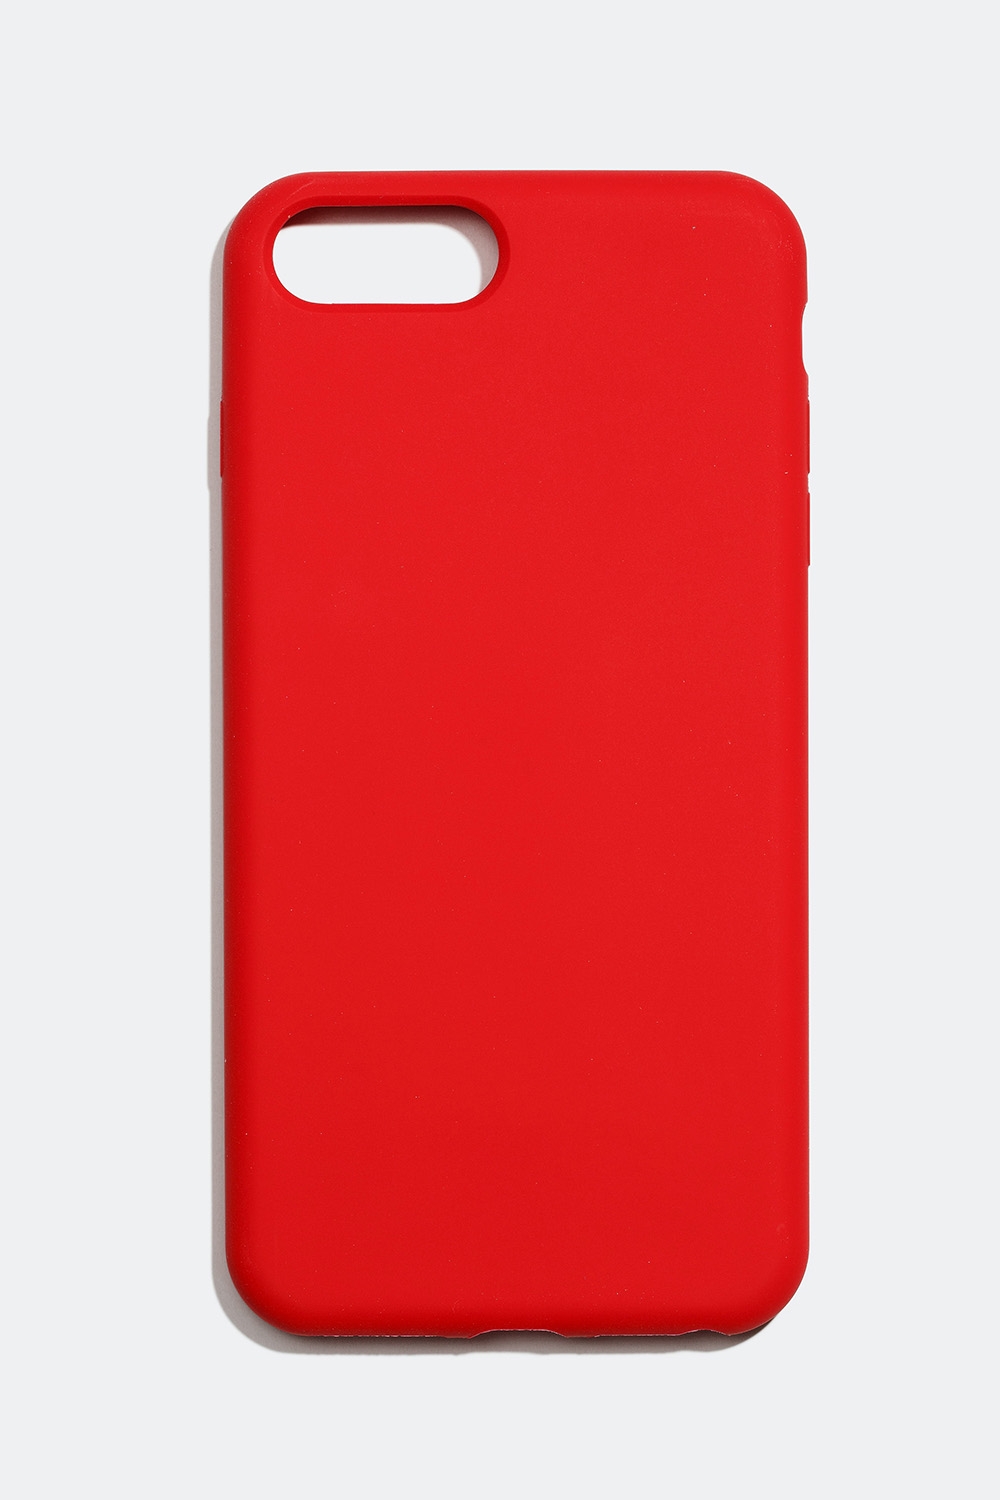 Matt mobilskal i rött, iPhone 6/7/8 plus i gruppen Accessoarer / Mobiltillbehör / Mobilskal / iPhone 6 / 7 / 8 hos Glitter (174000356206)